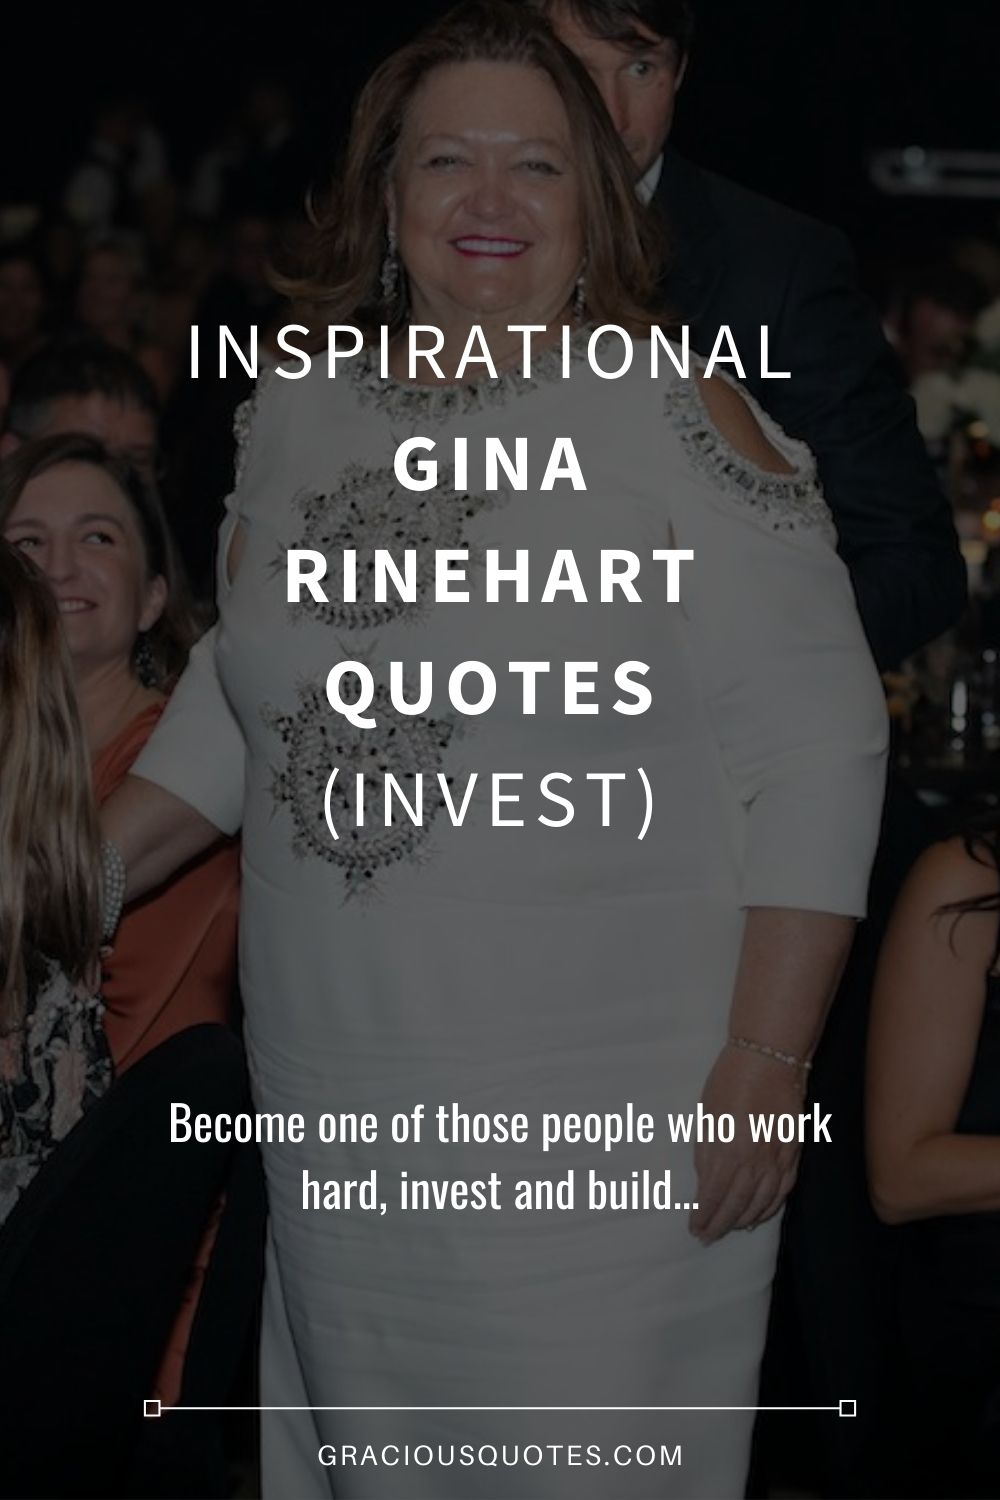 Inspirational Gina Rinehart Quotes (INVEST) - Gracious Quotes